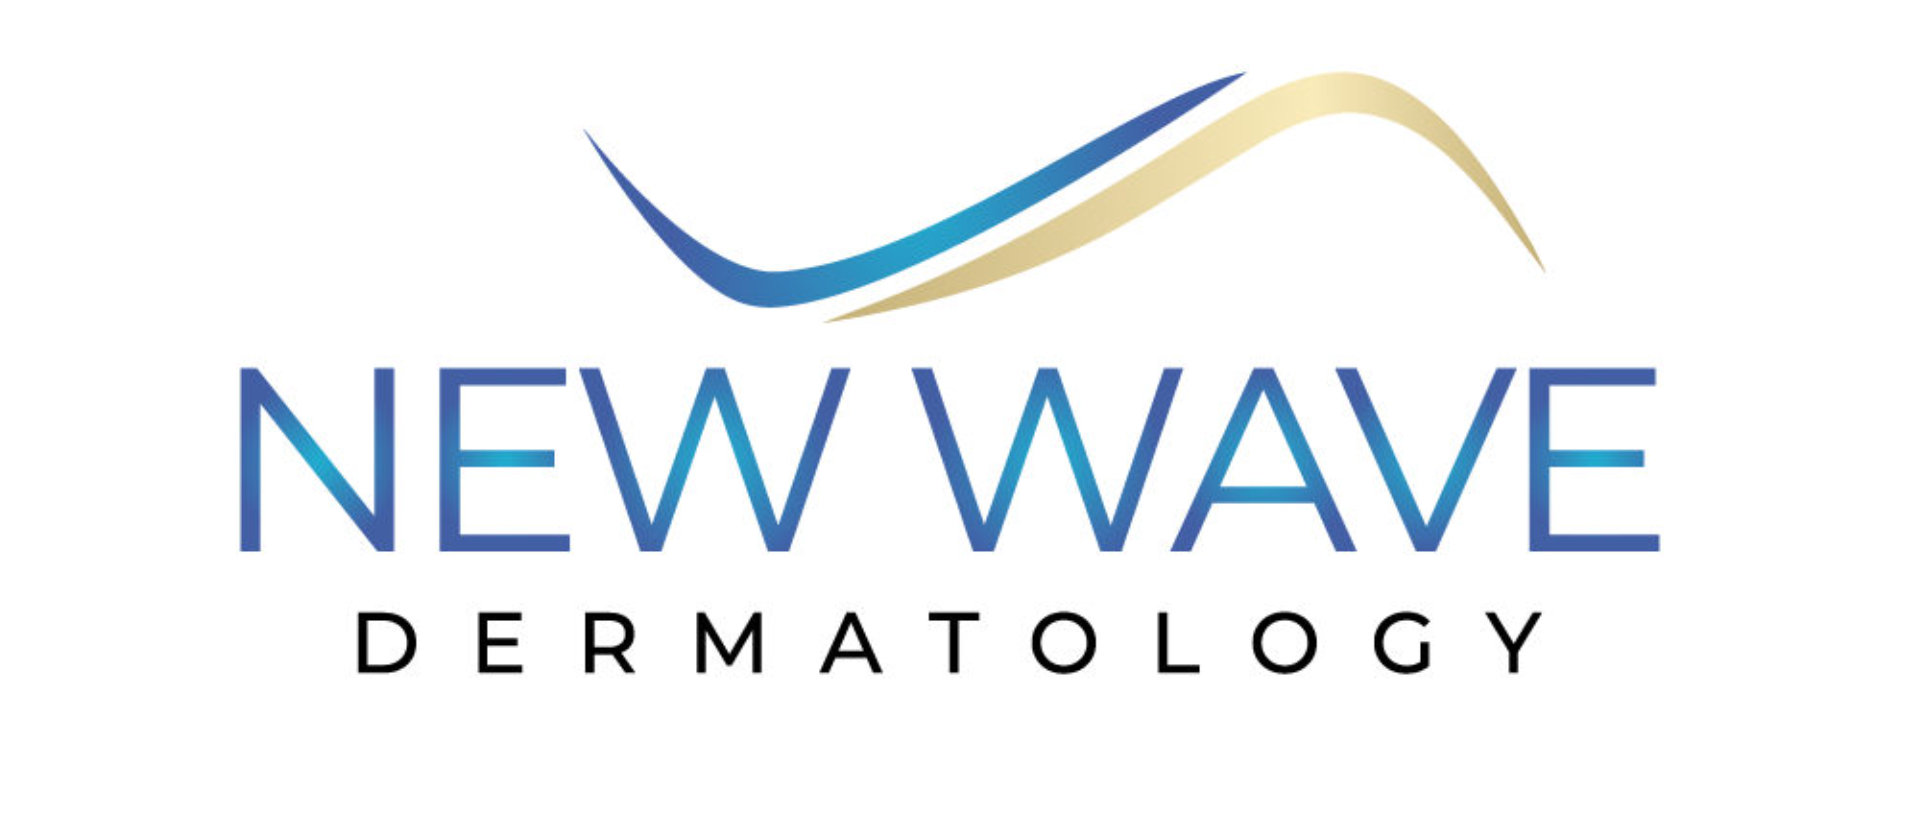 New Wave Dermatology logo